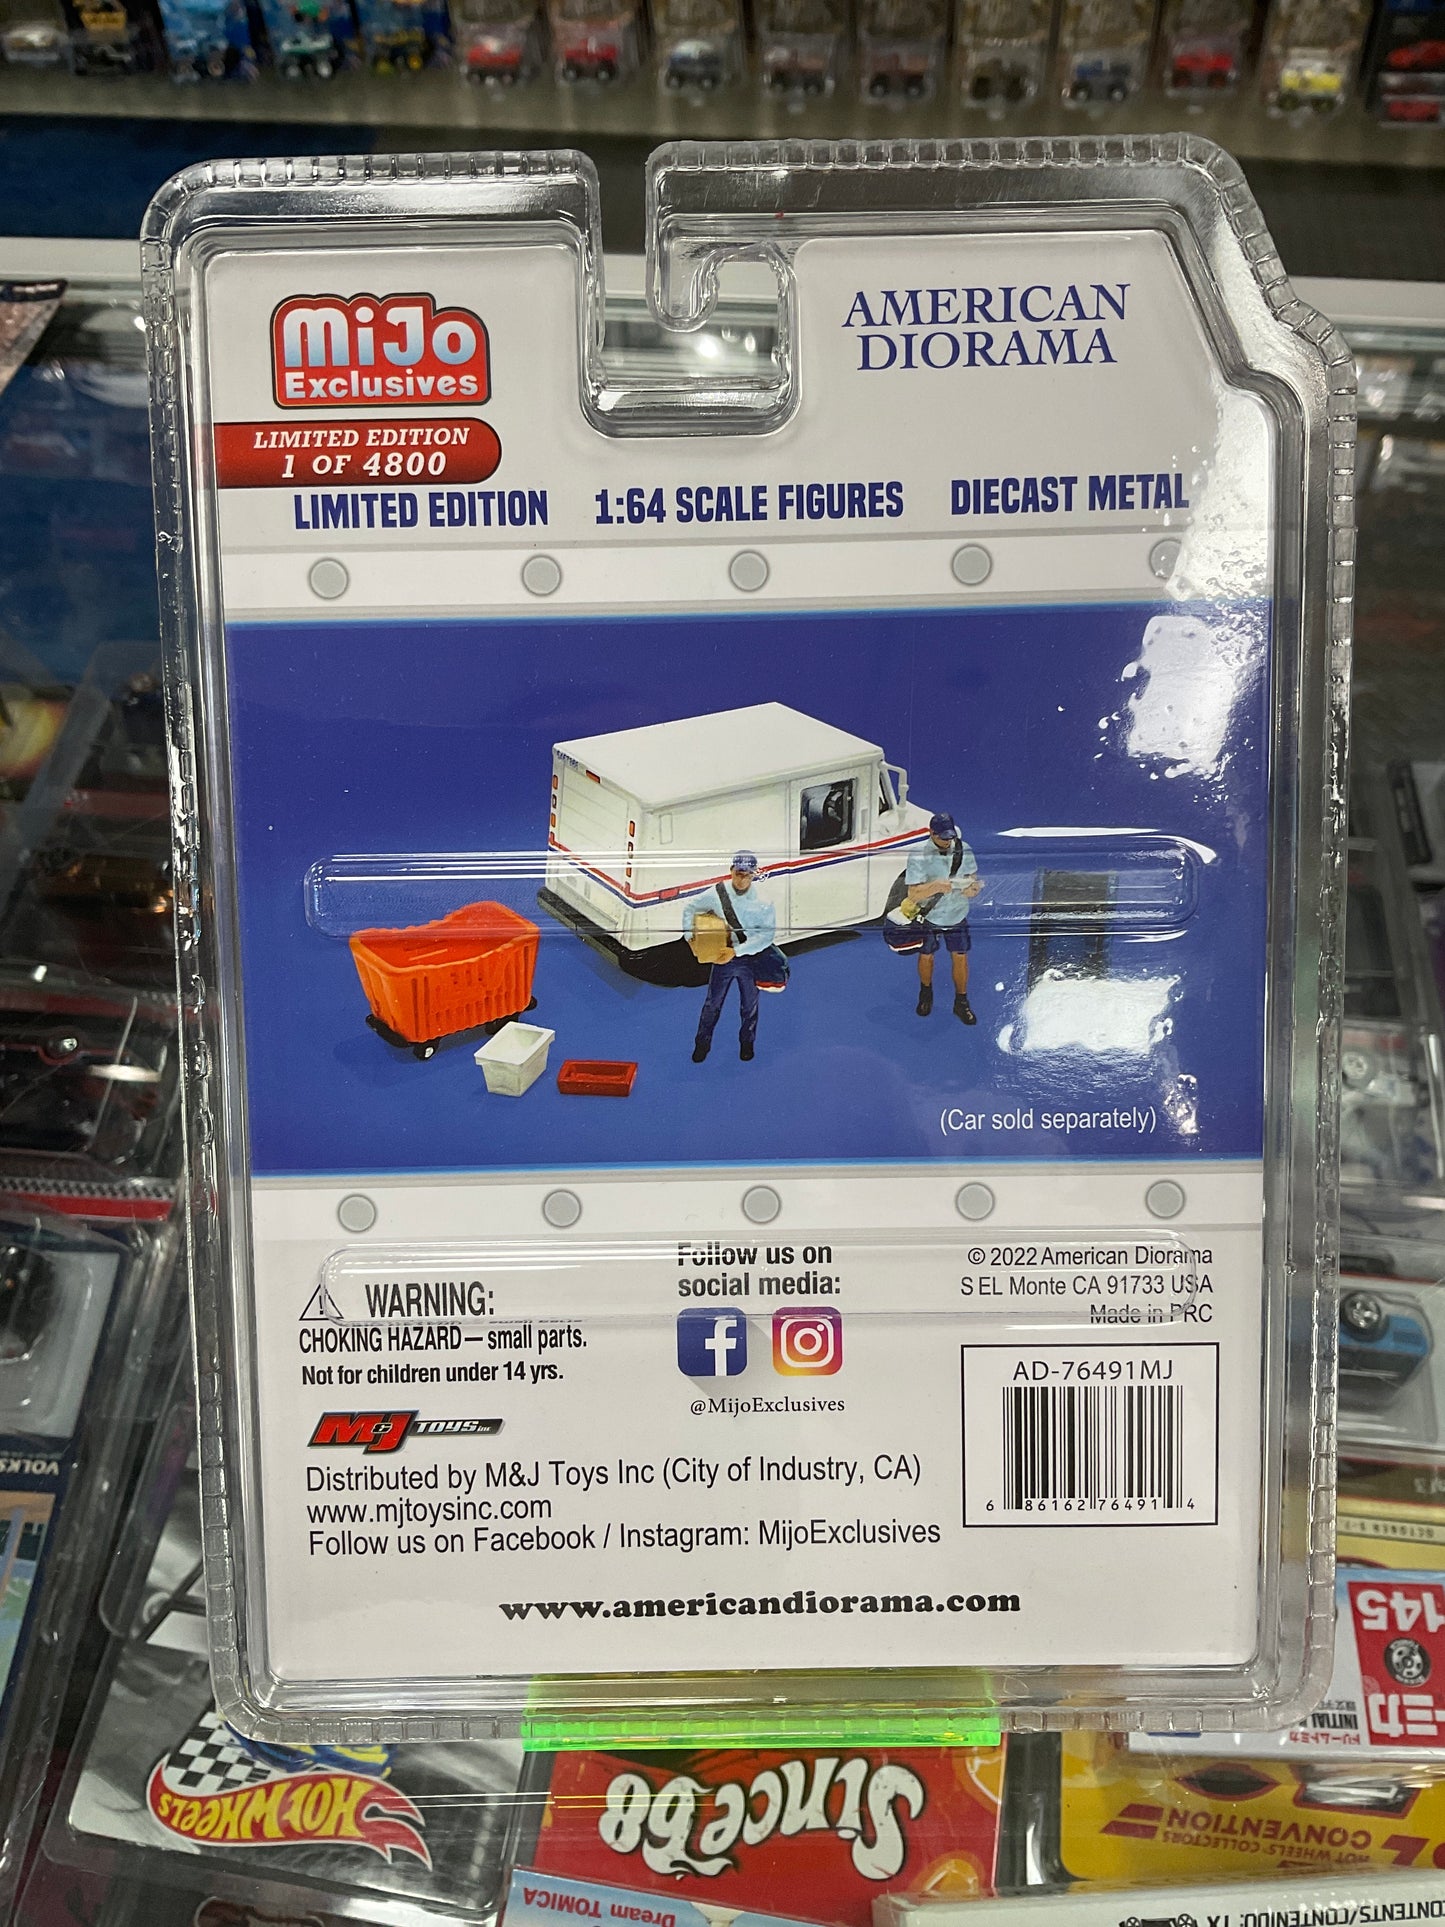 American diorama Mijo Exclusive Mail Service 1:64 diecast figures